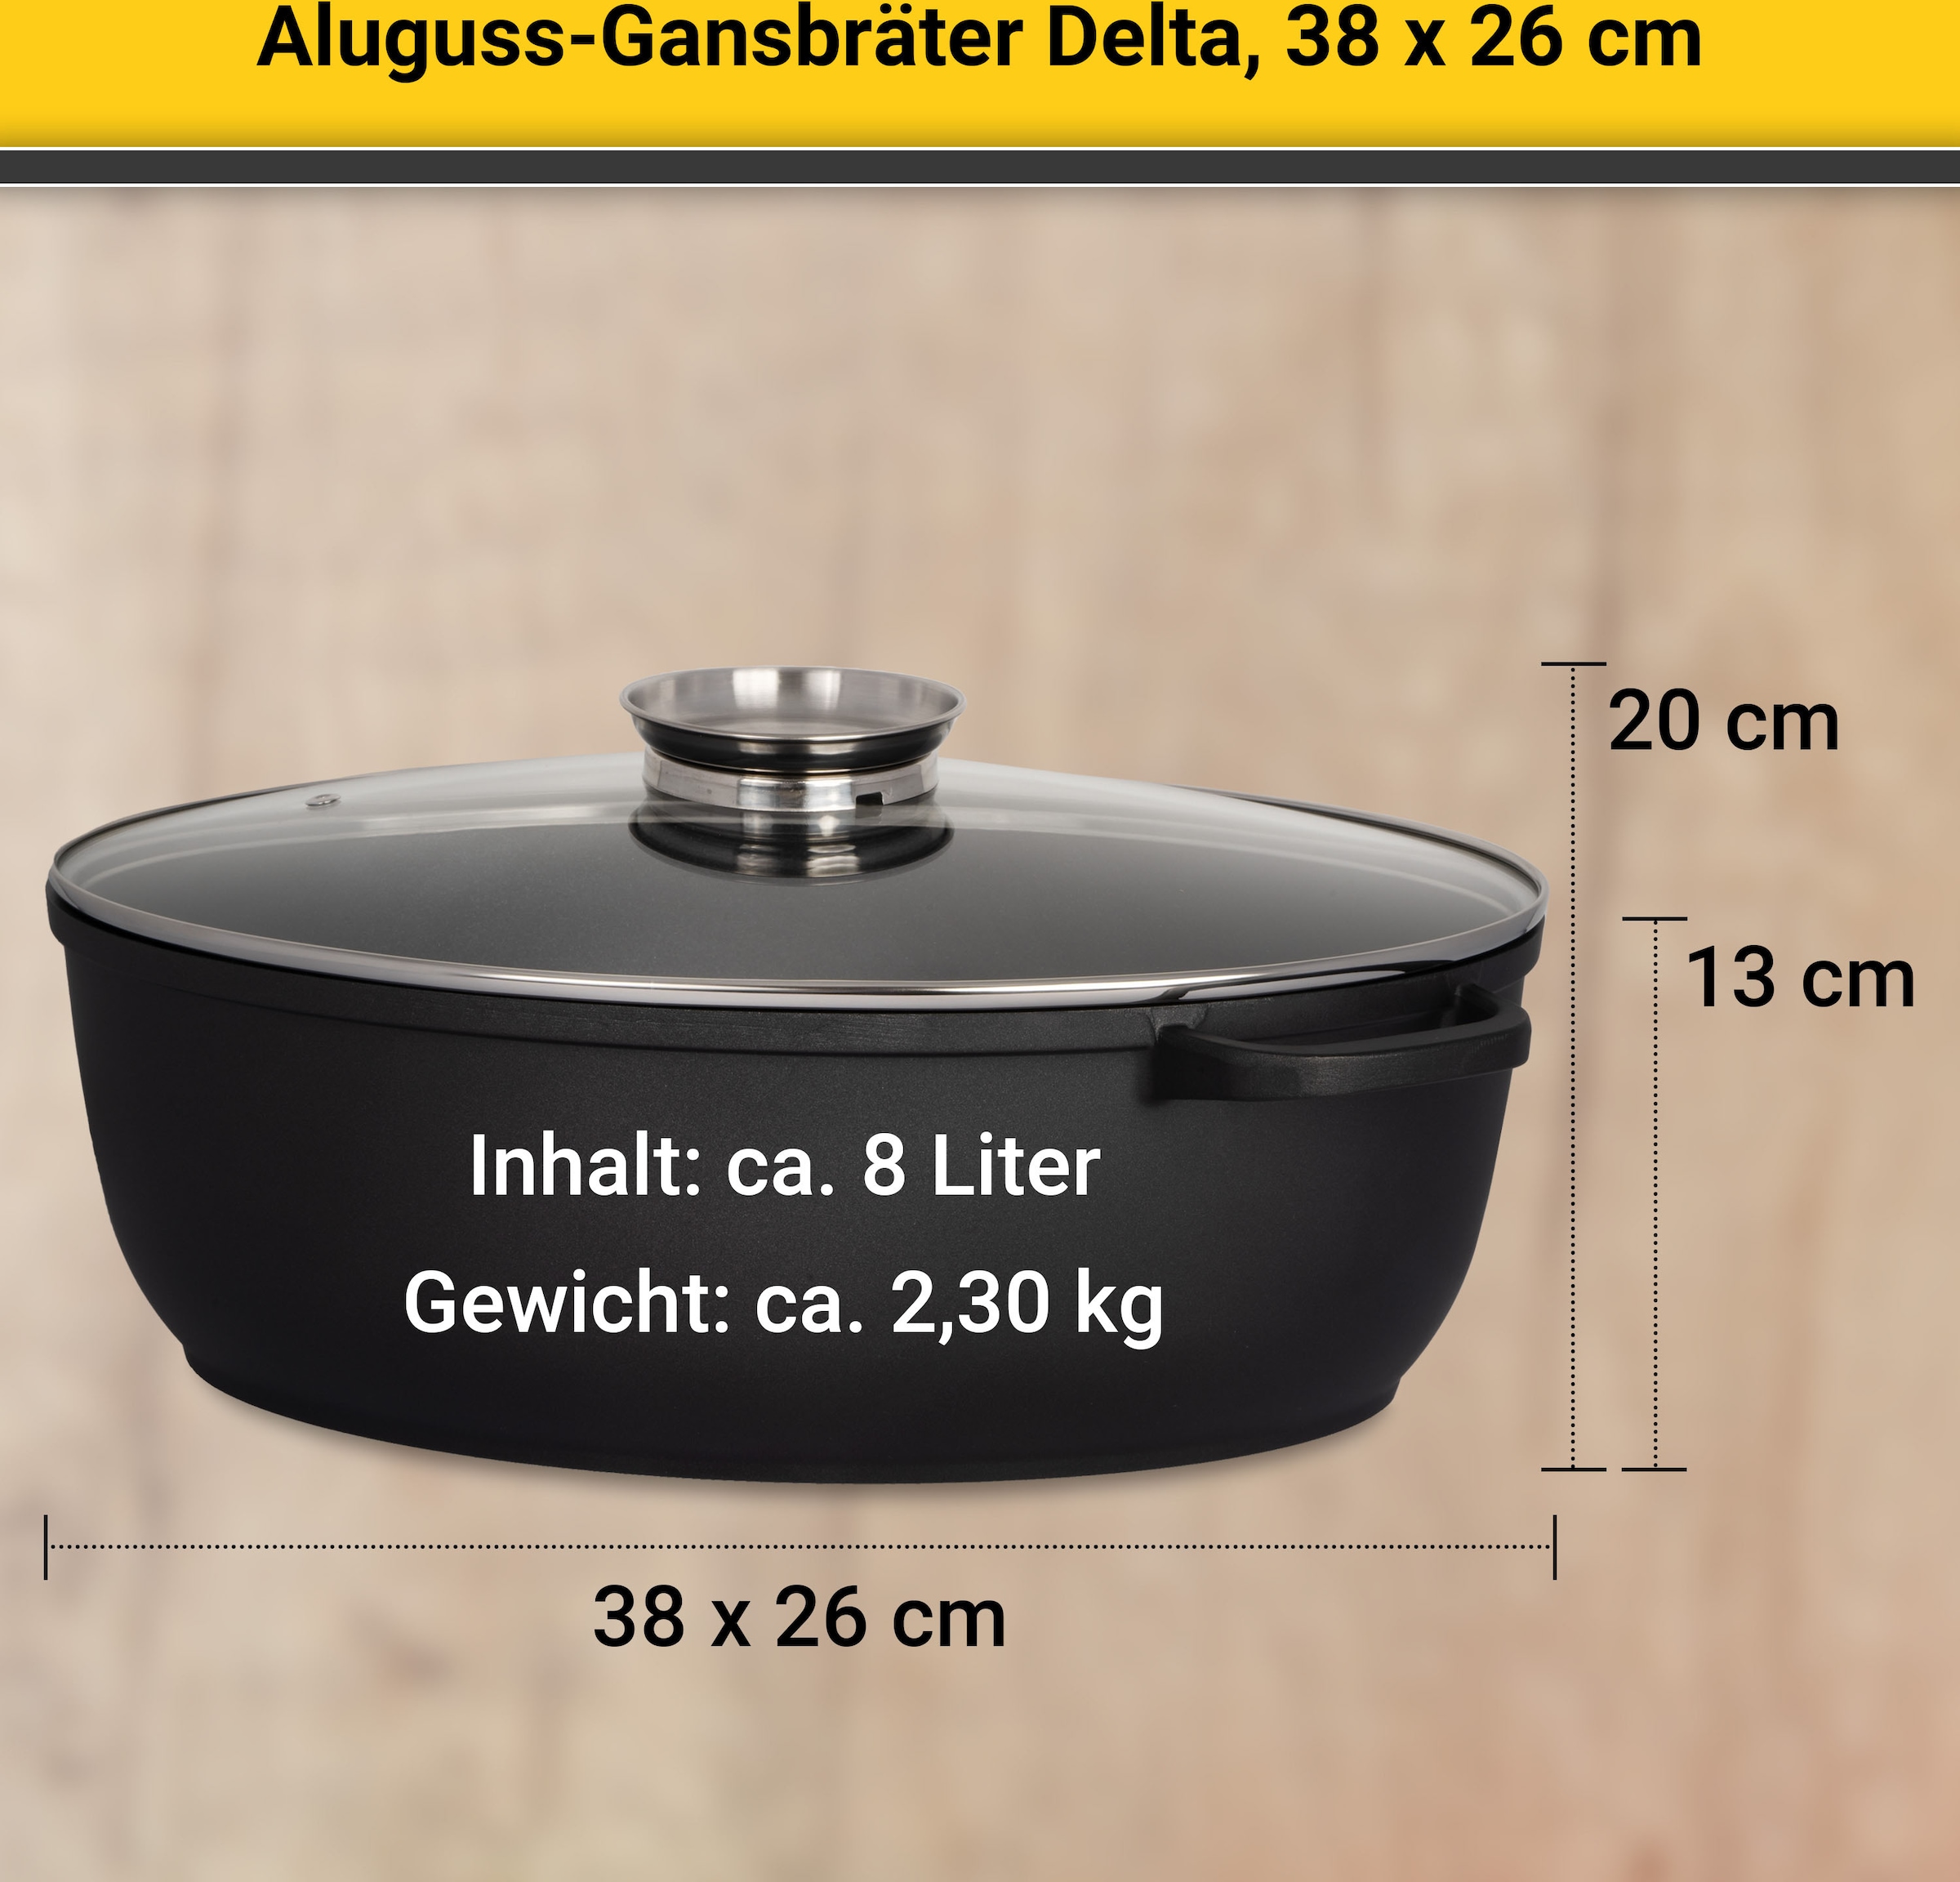 Krüger Bräter »Aluguss Gansbräter mit Glasdeckel und Aromaknopf DELTA, 38x26x13 cm«, Aluminiumguss, (1 tlg.), für Induktions-Kochfelder geeignet